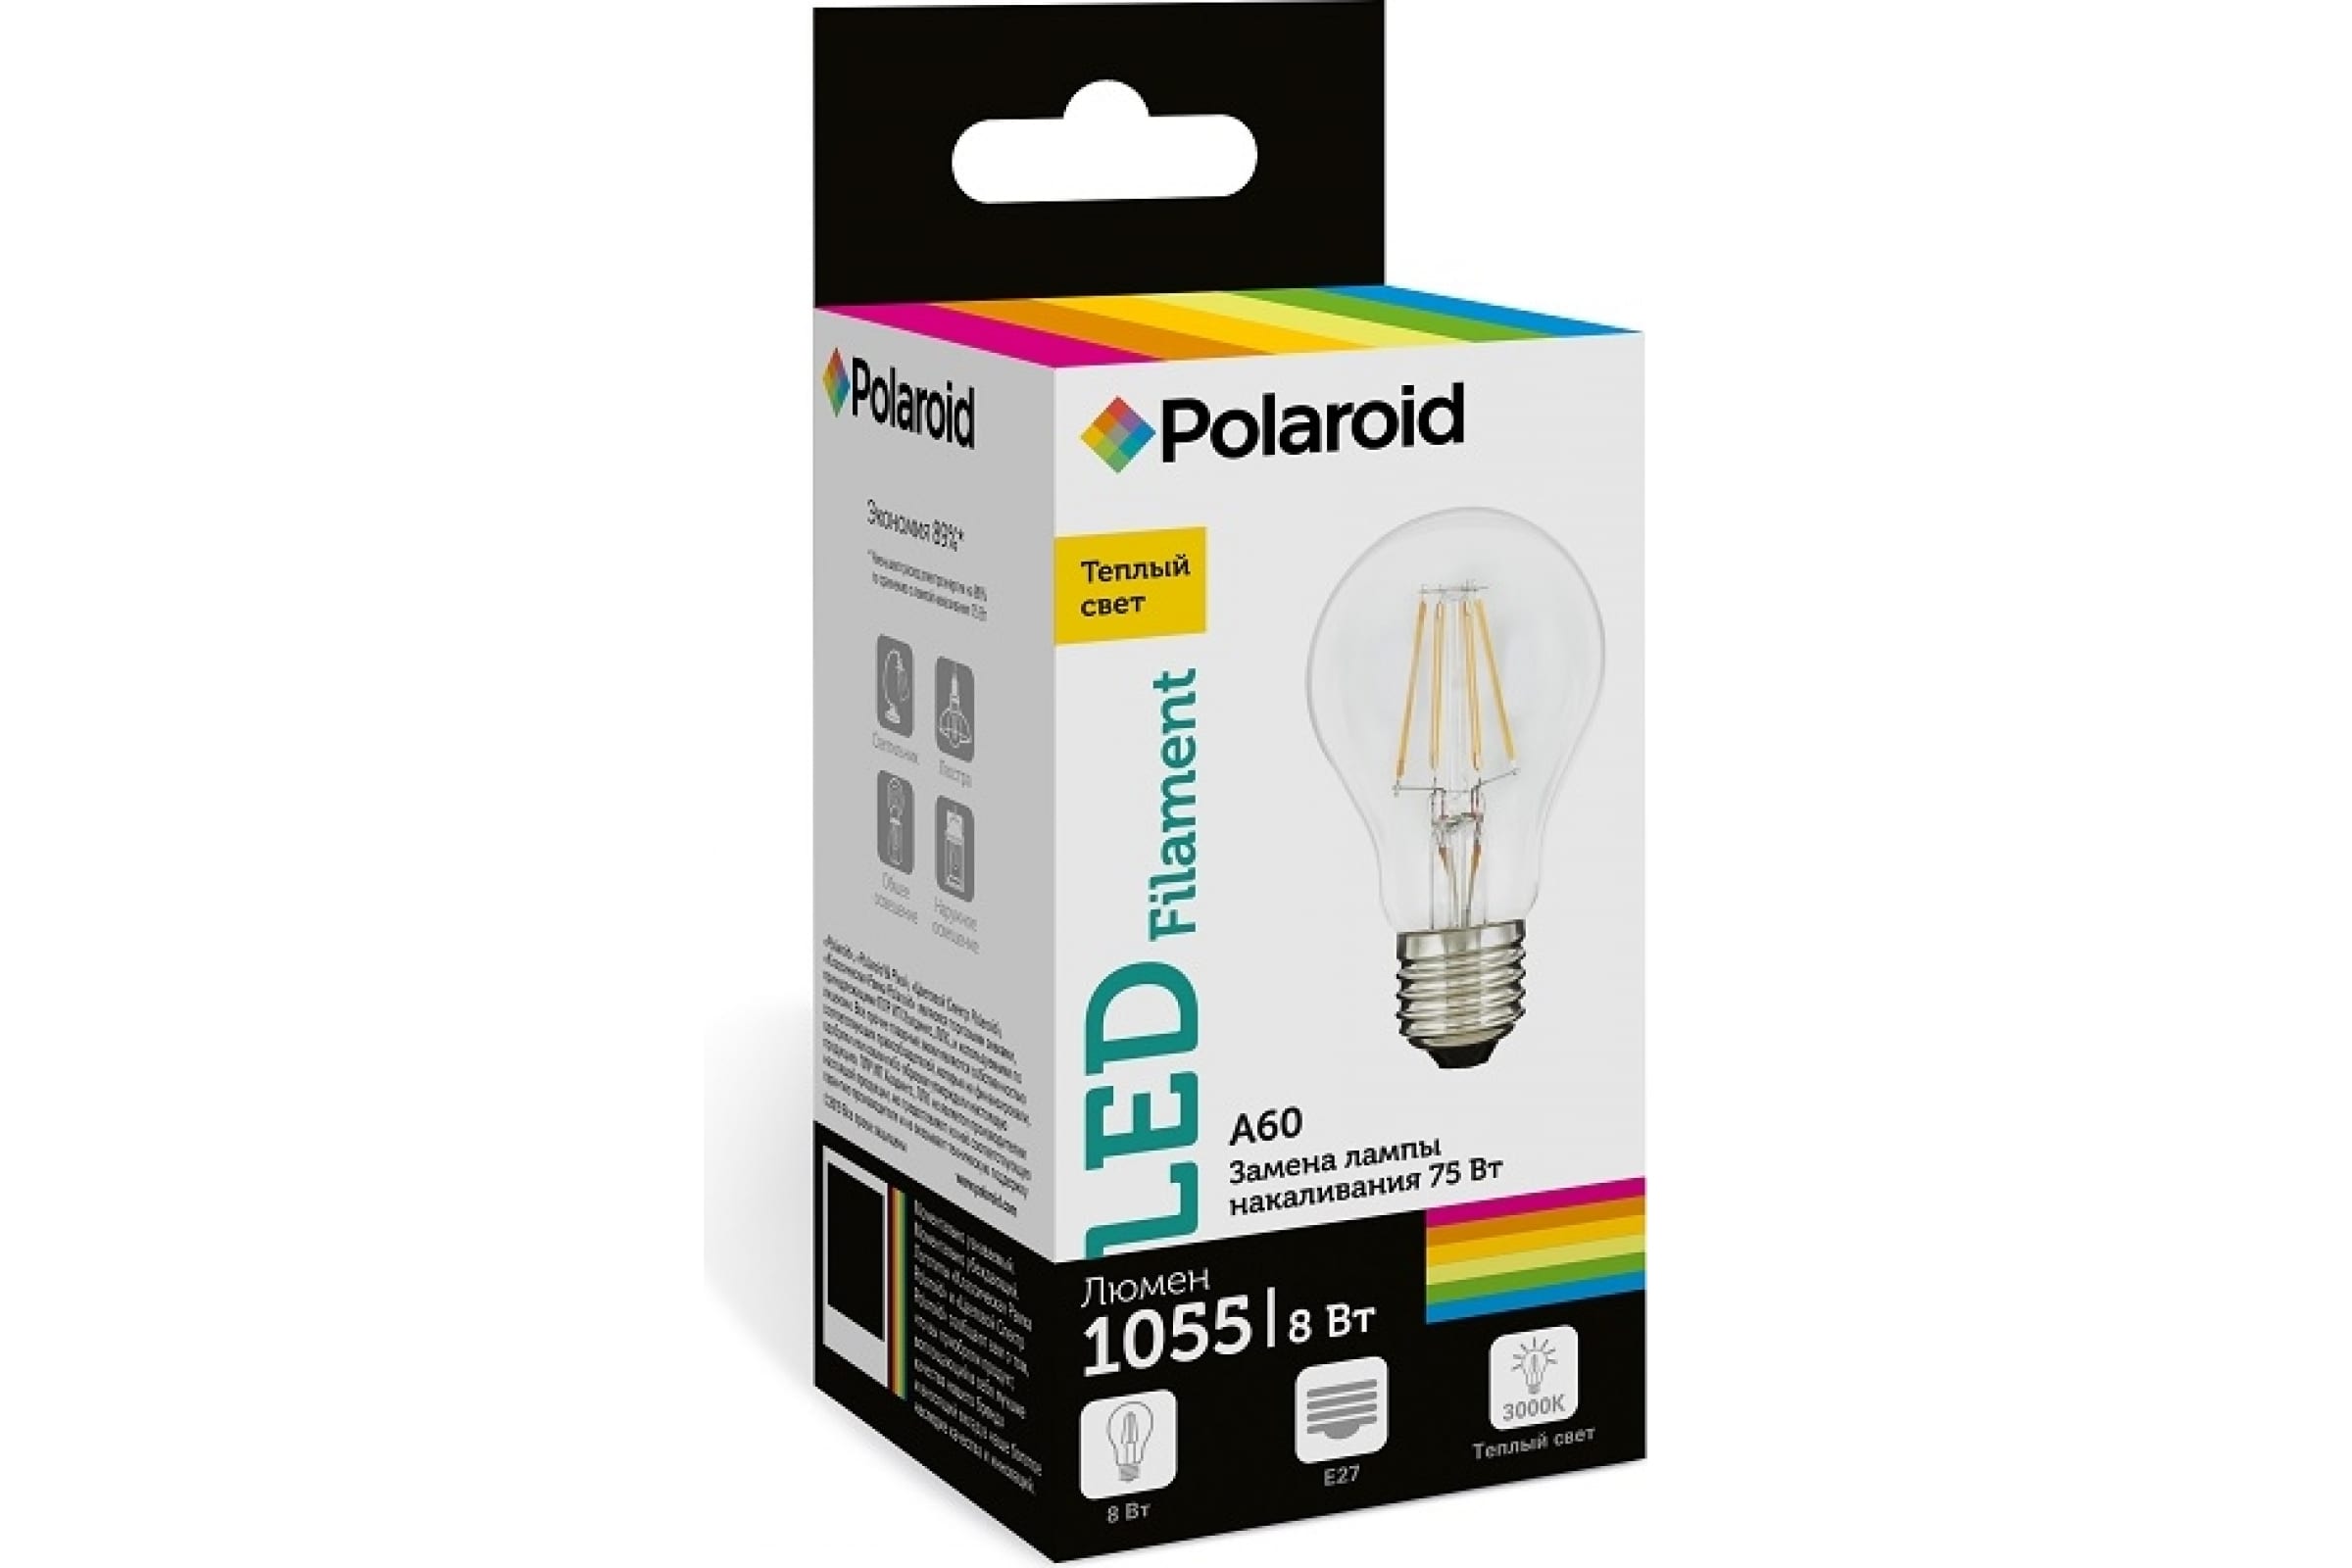 Polaroid Светодиодная лампа 220V FIL A60 8W 3000K E27 1055lm PL-A60F4283